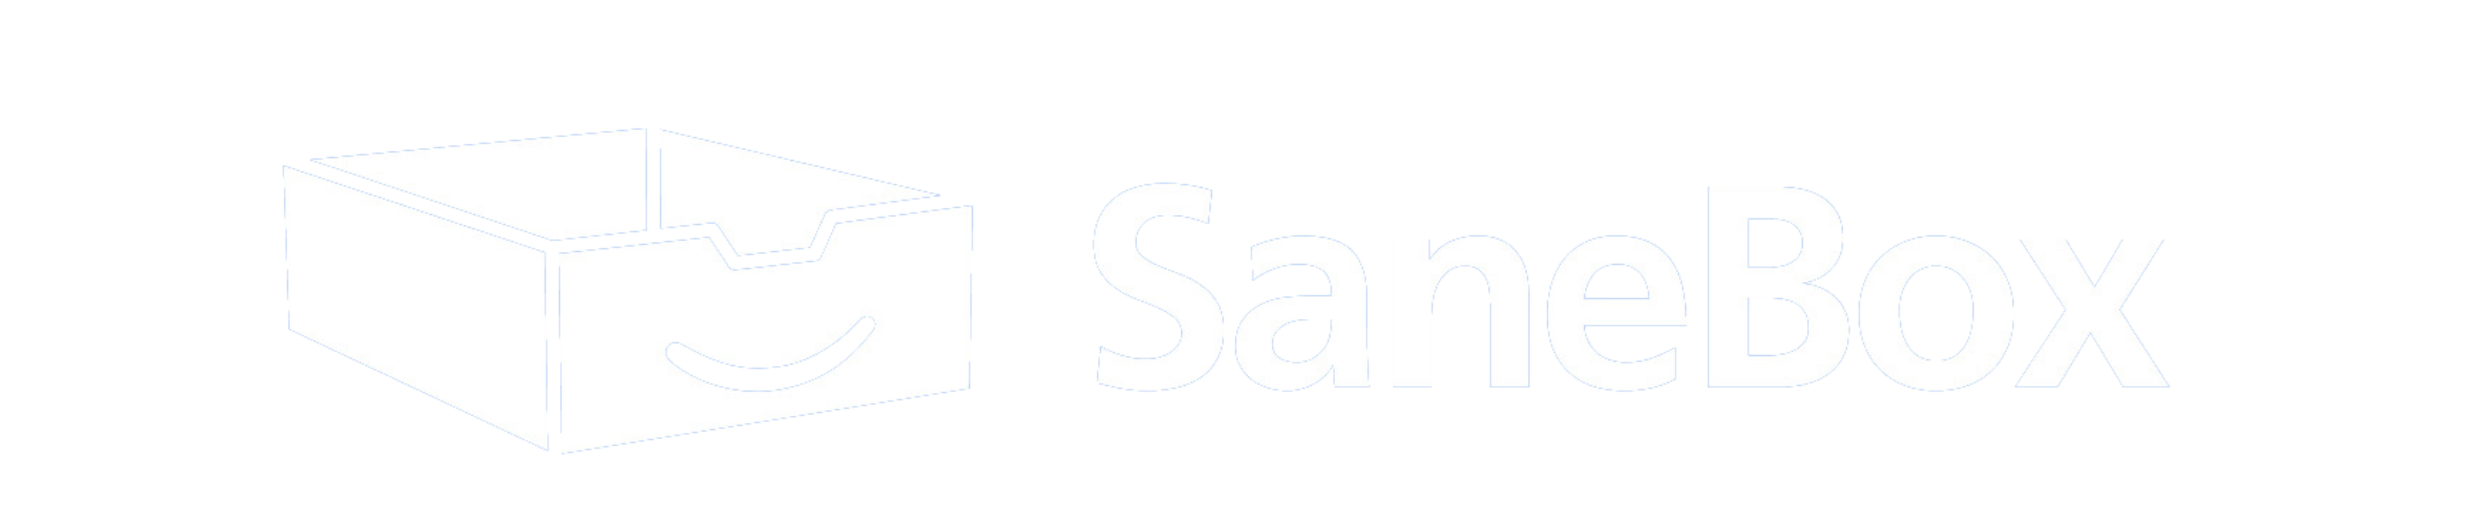 sanebox-white.png